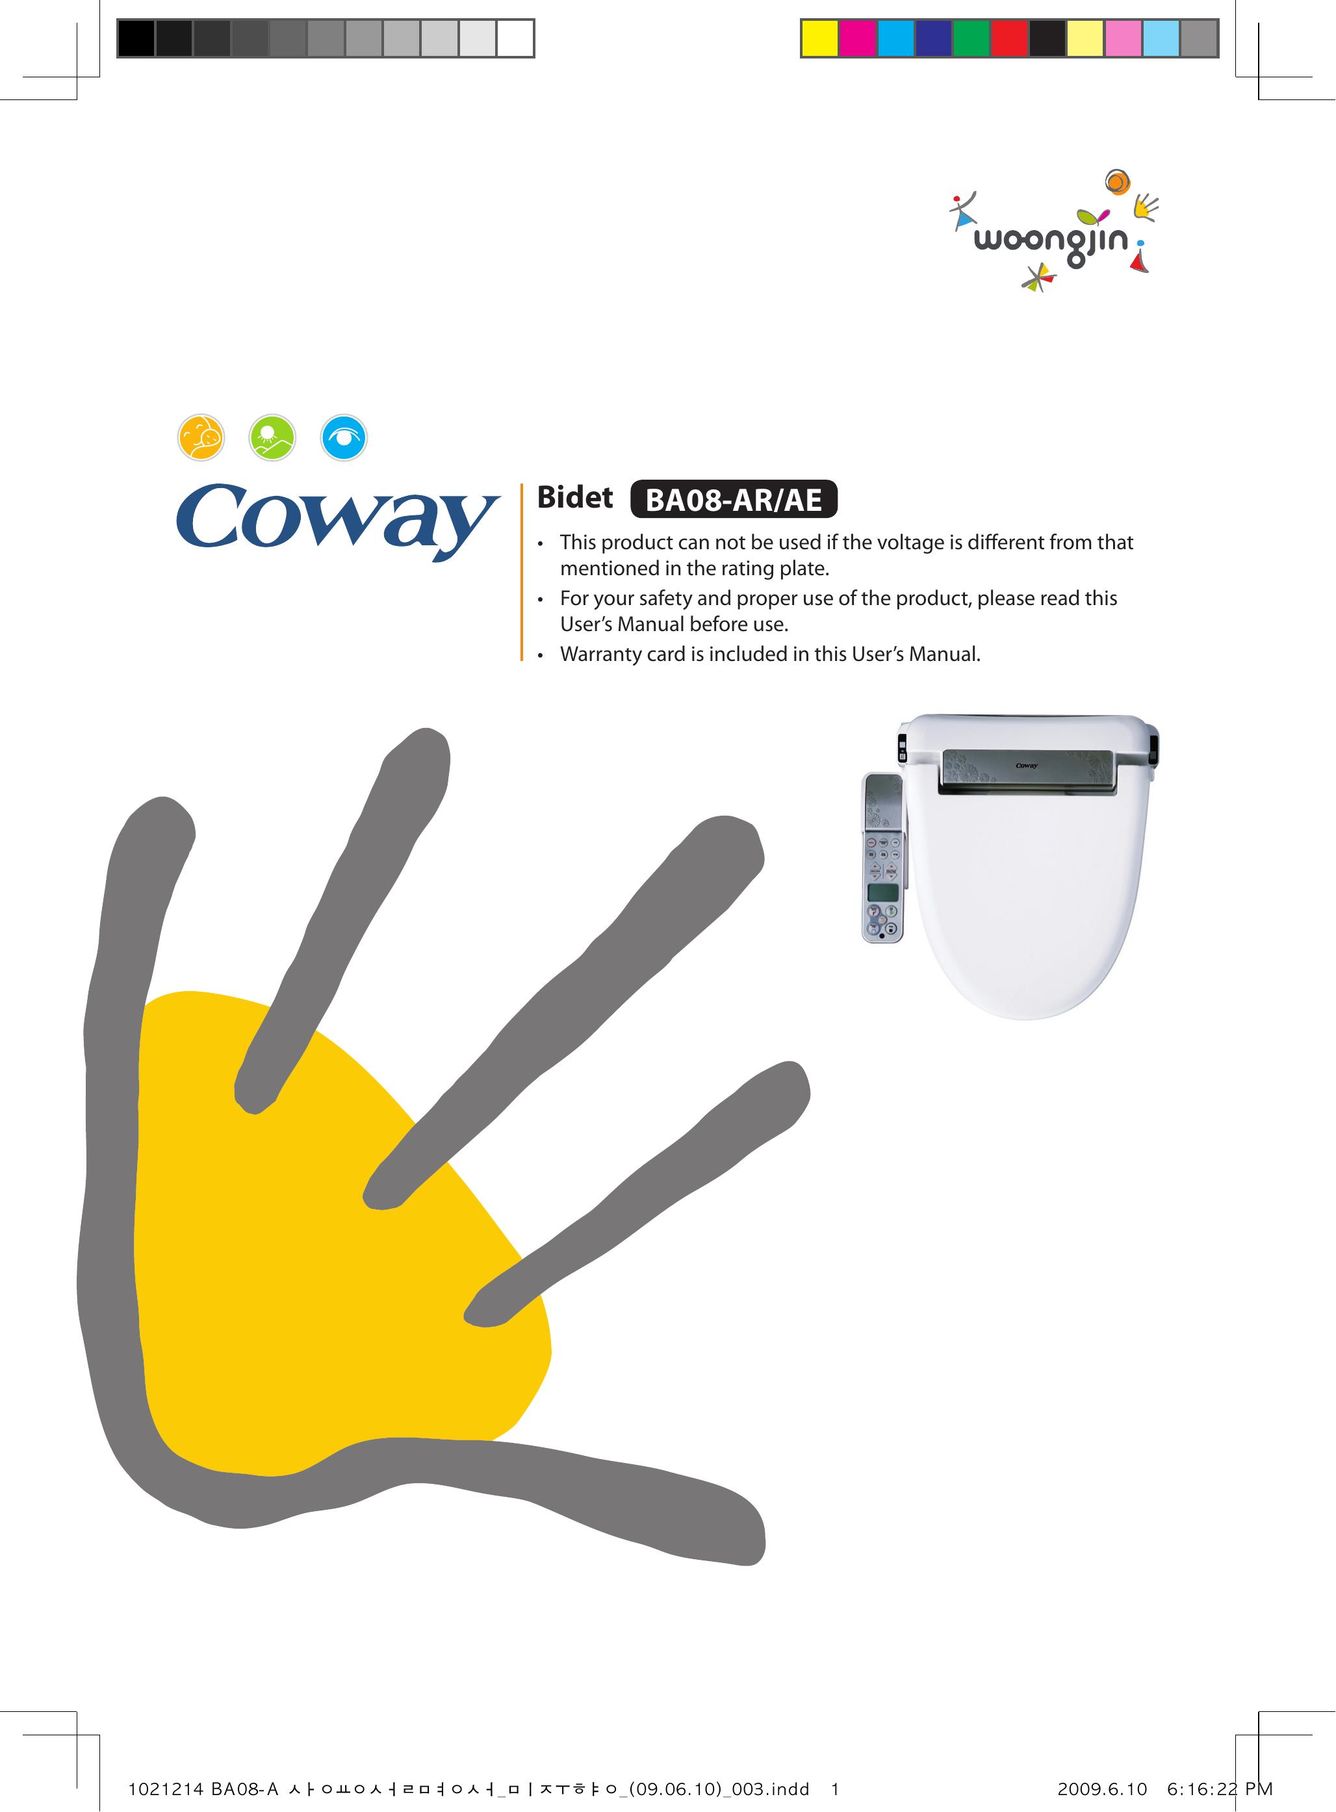 Coway BA08-AE Plumbing Product User Manual